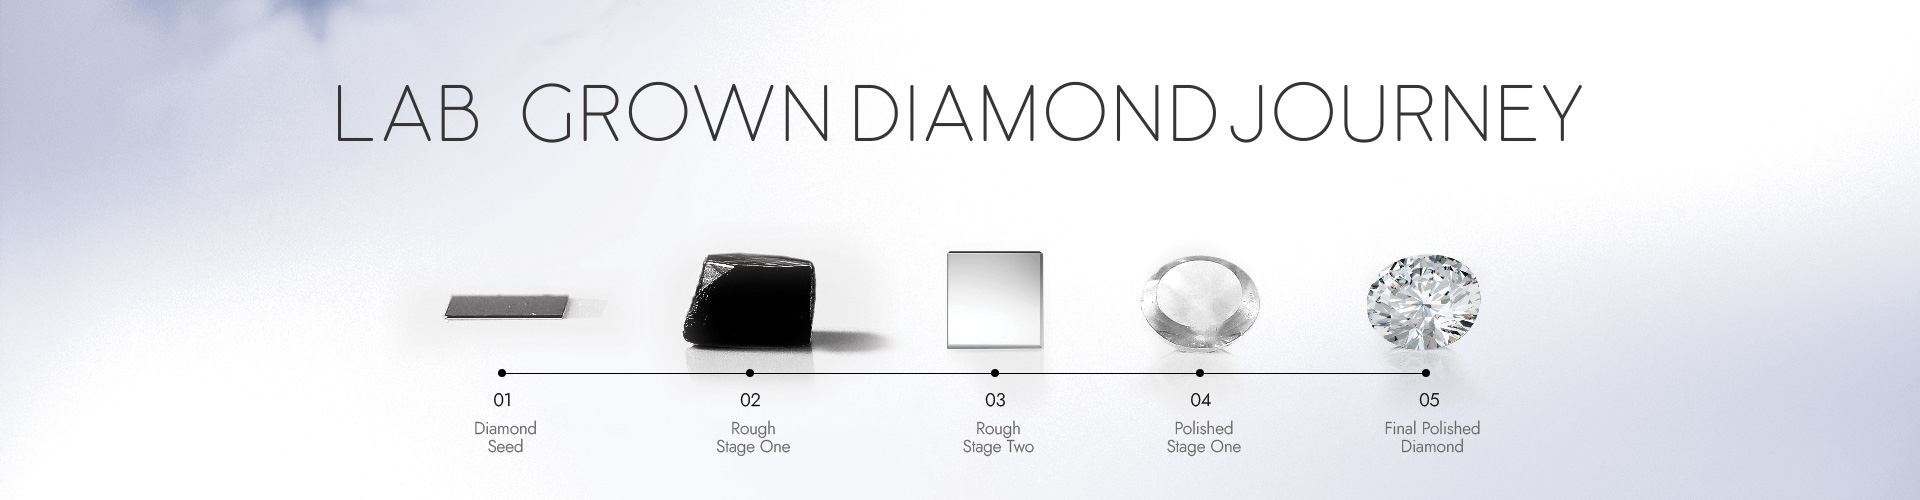 Lab-grown diamond journey